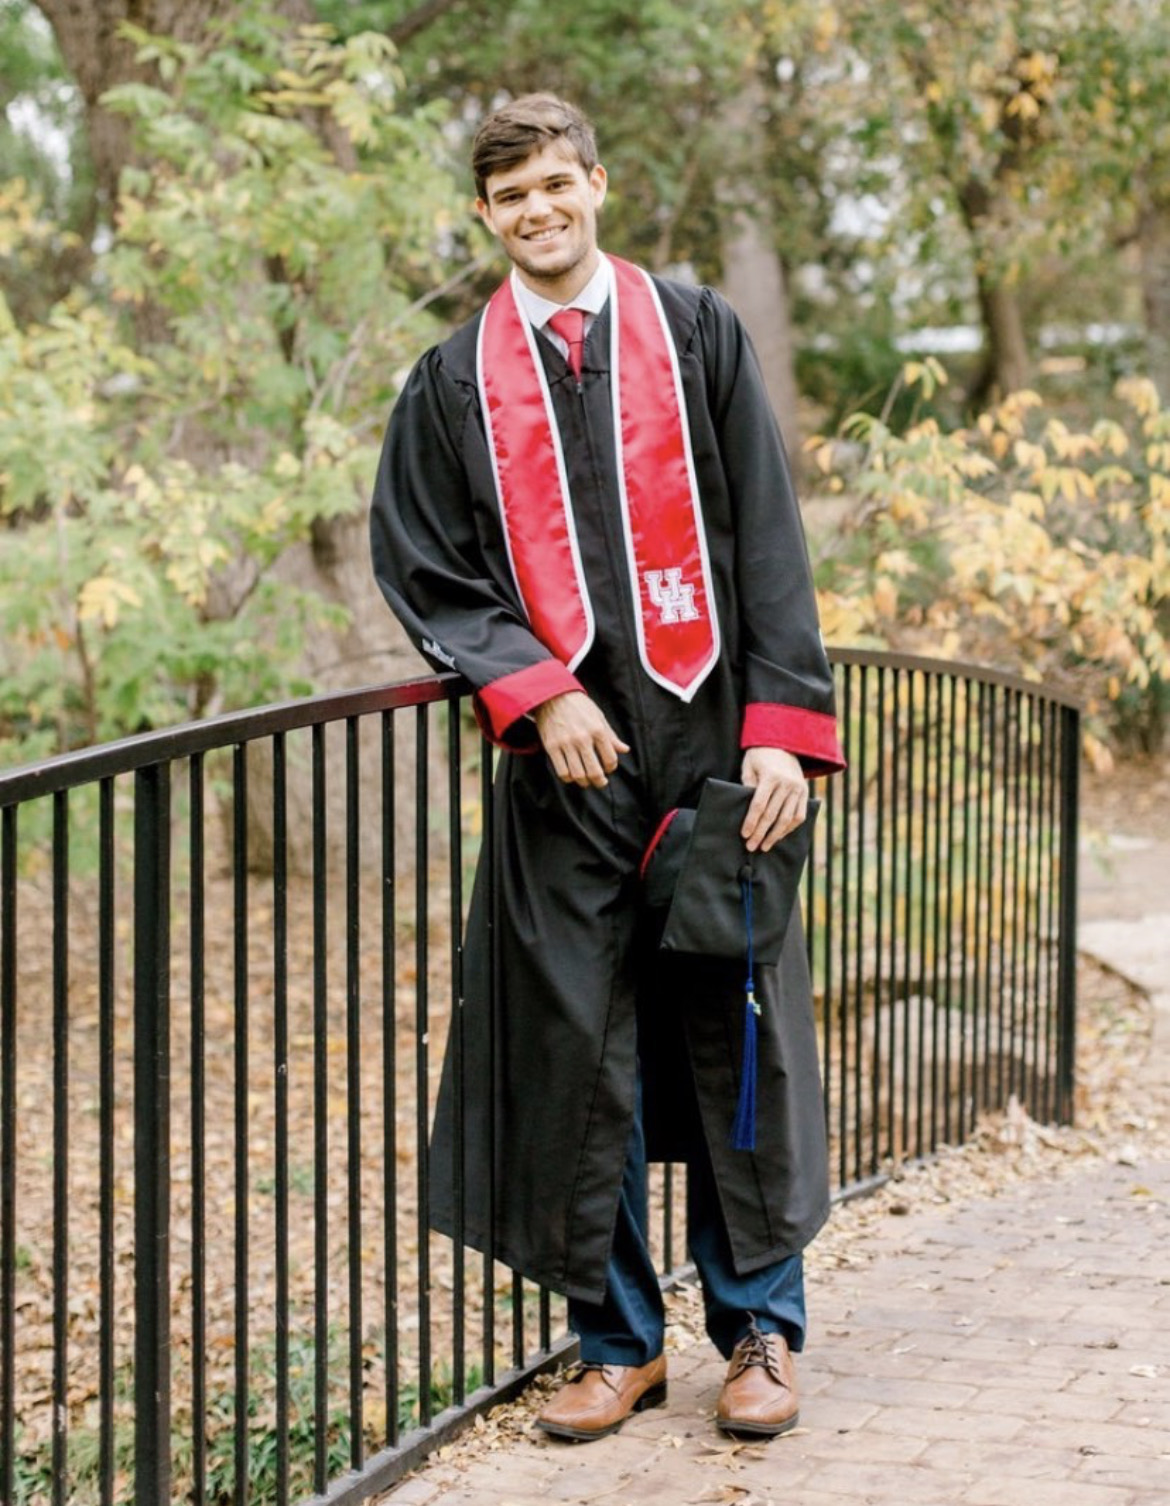 Austin's Graduation Photo